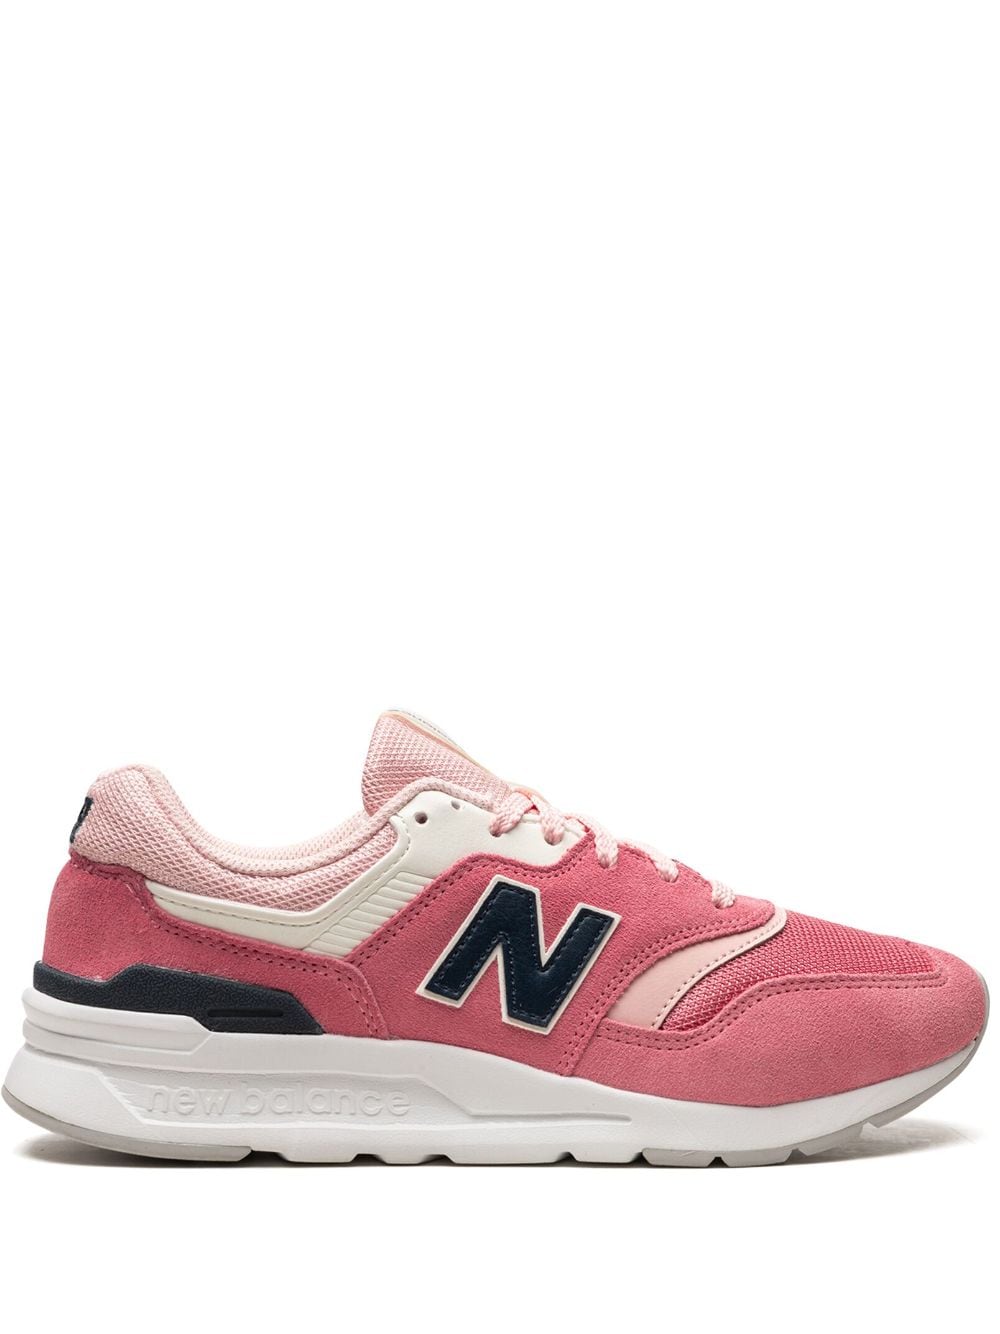 New Balance 997 "Pink Haze White" sneakers von New Balance